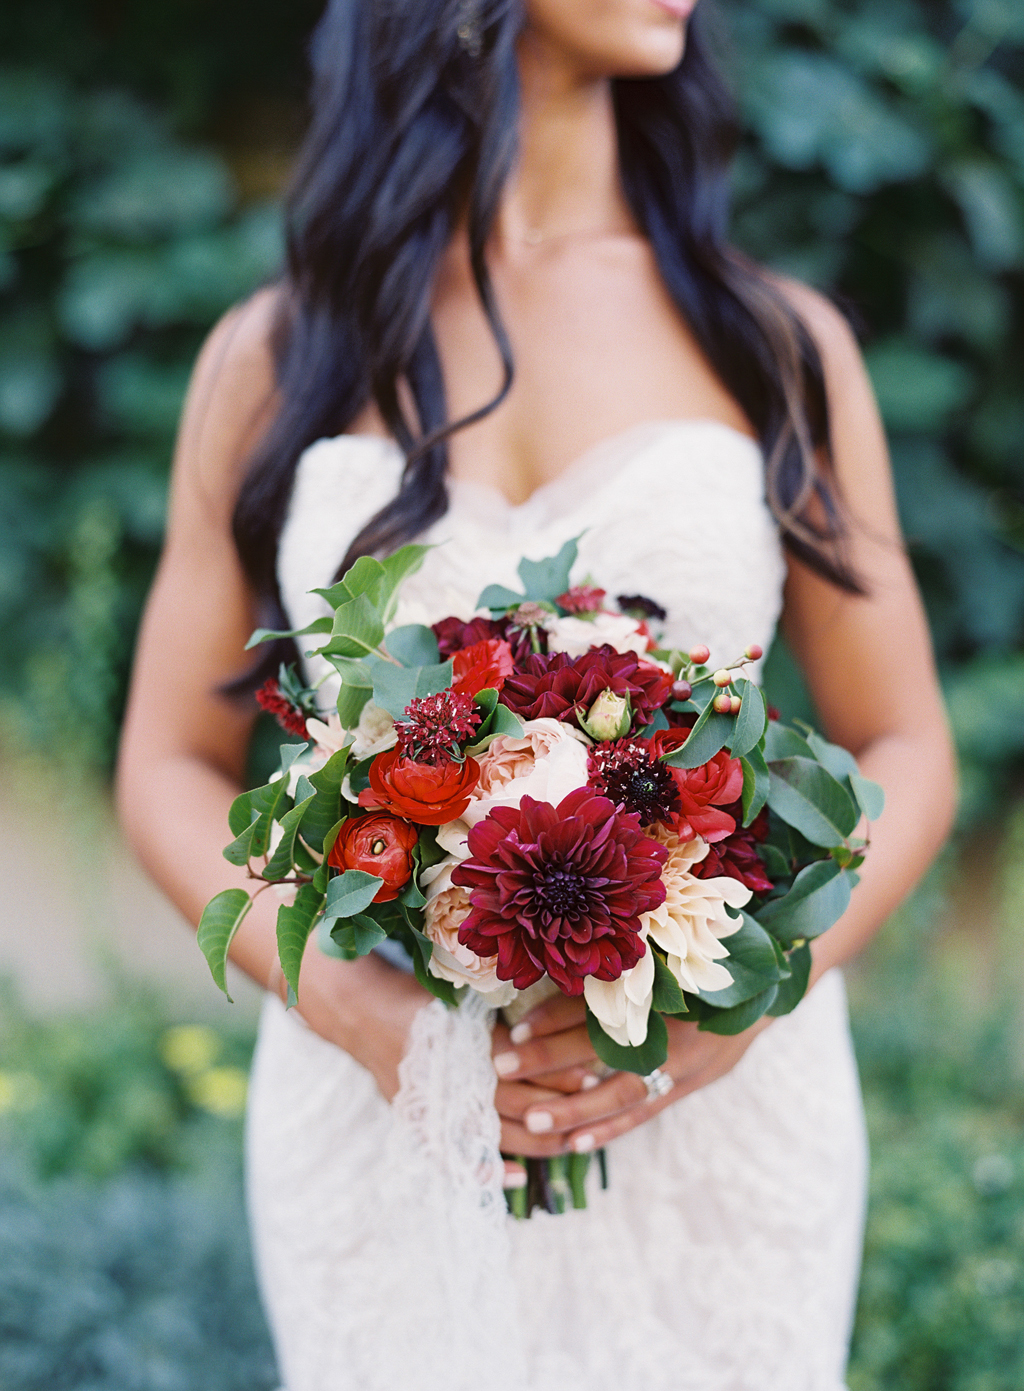 a wedding bouquet shot on film.